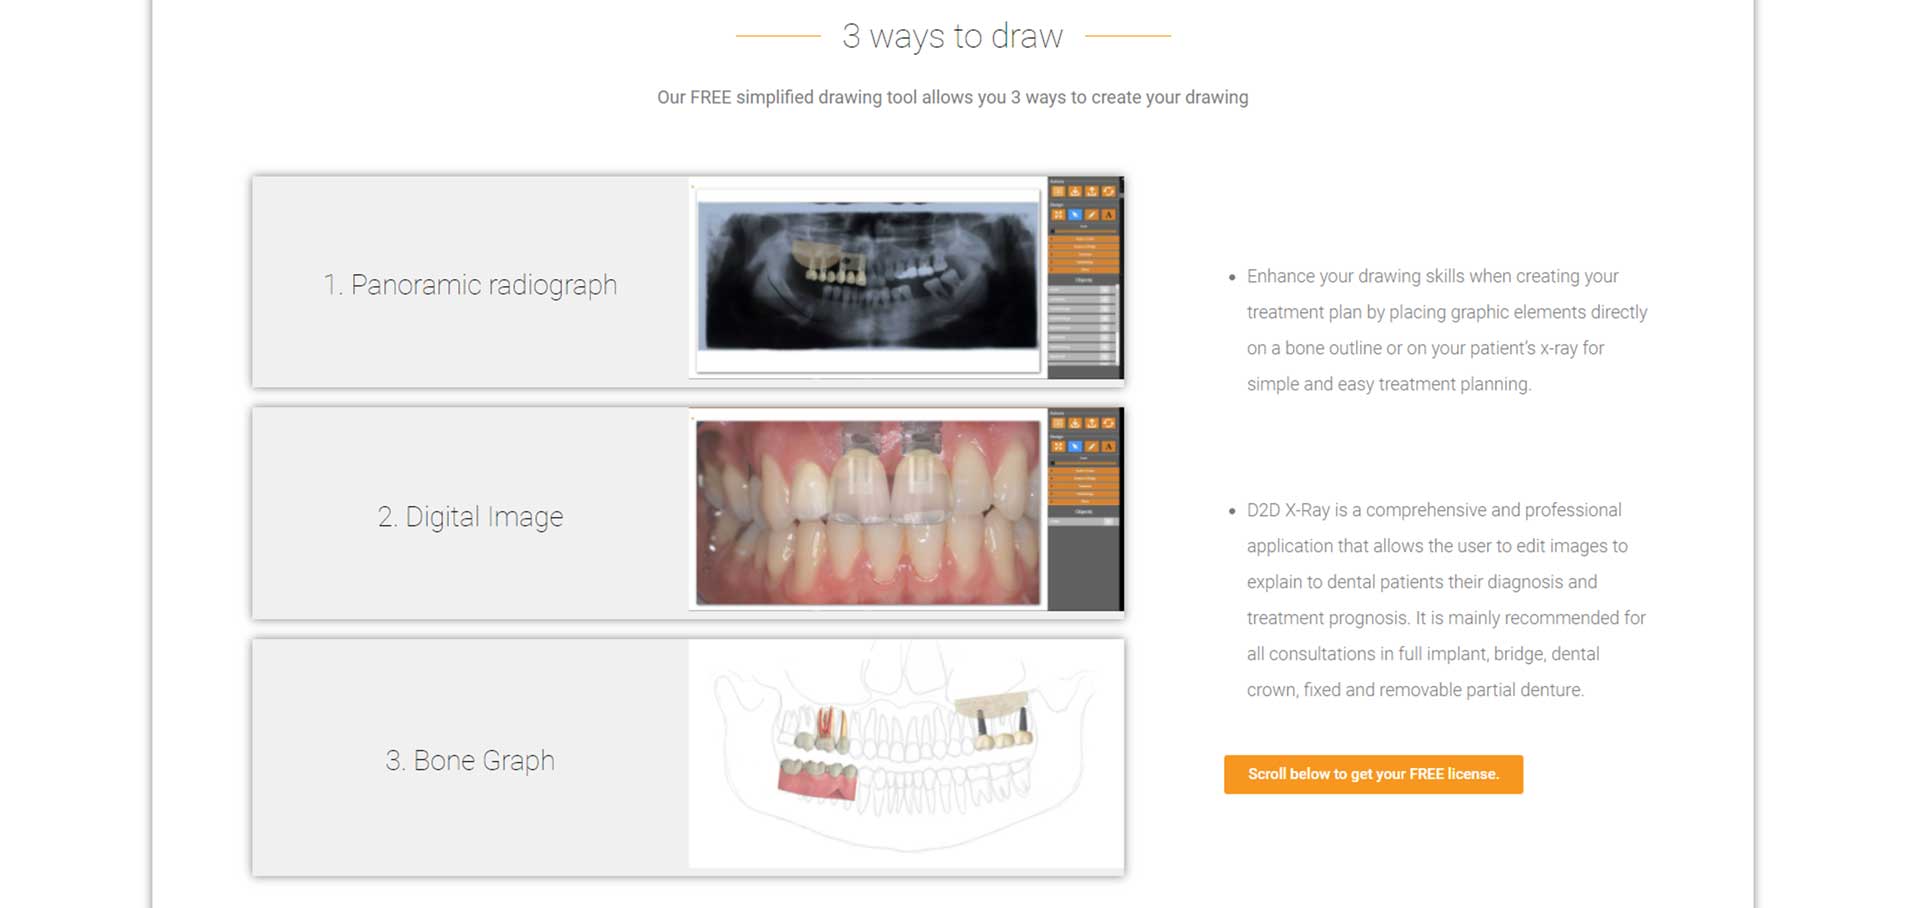 Dental2Drawing website